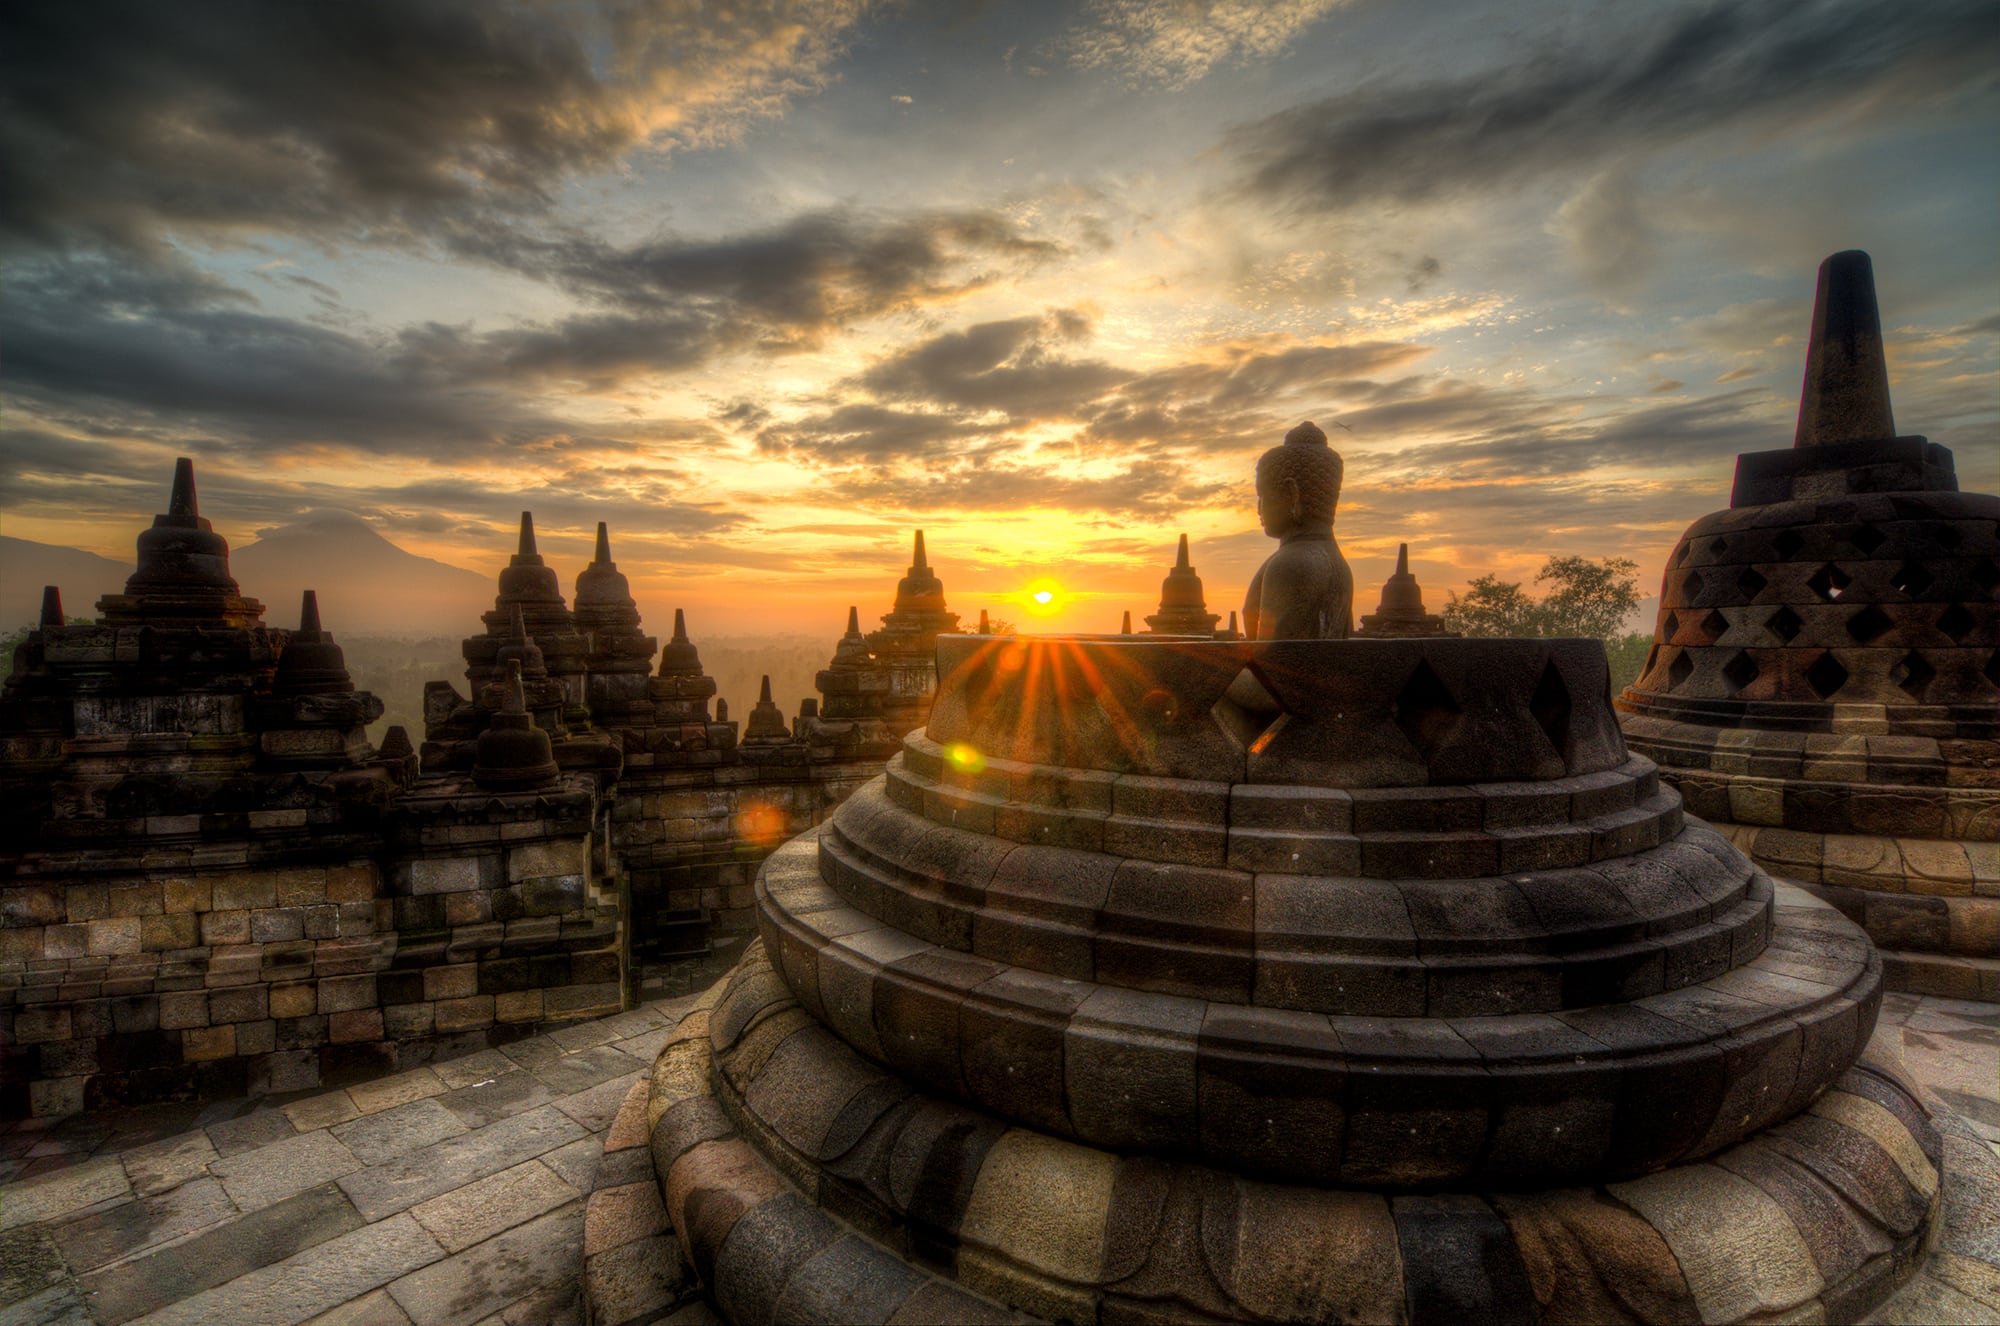 Borobudur Sunrise Tour